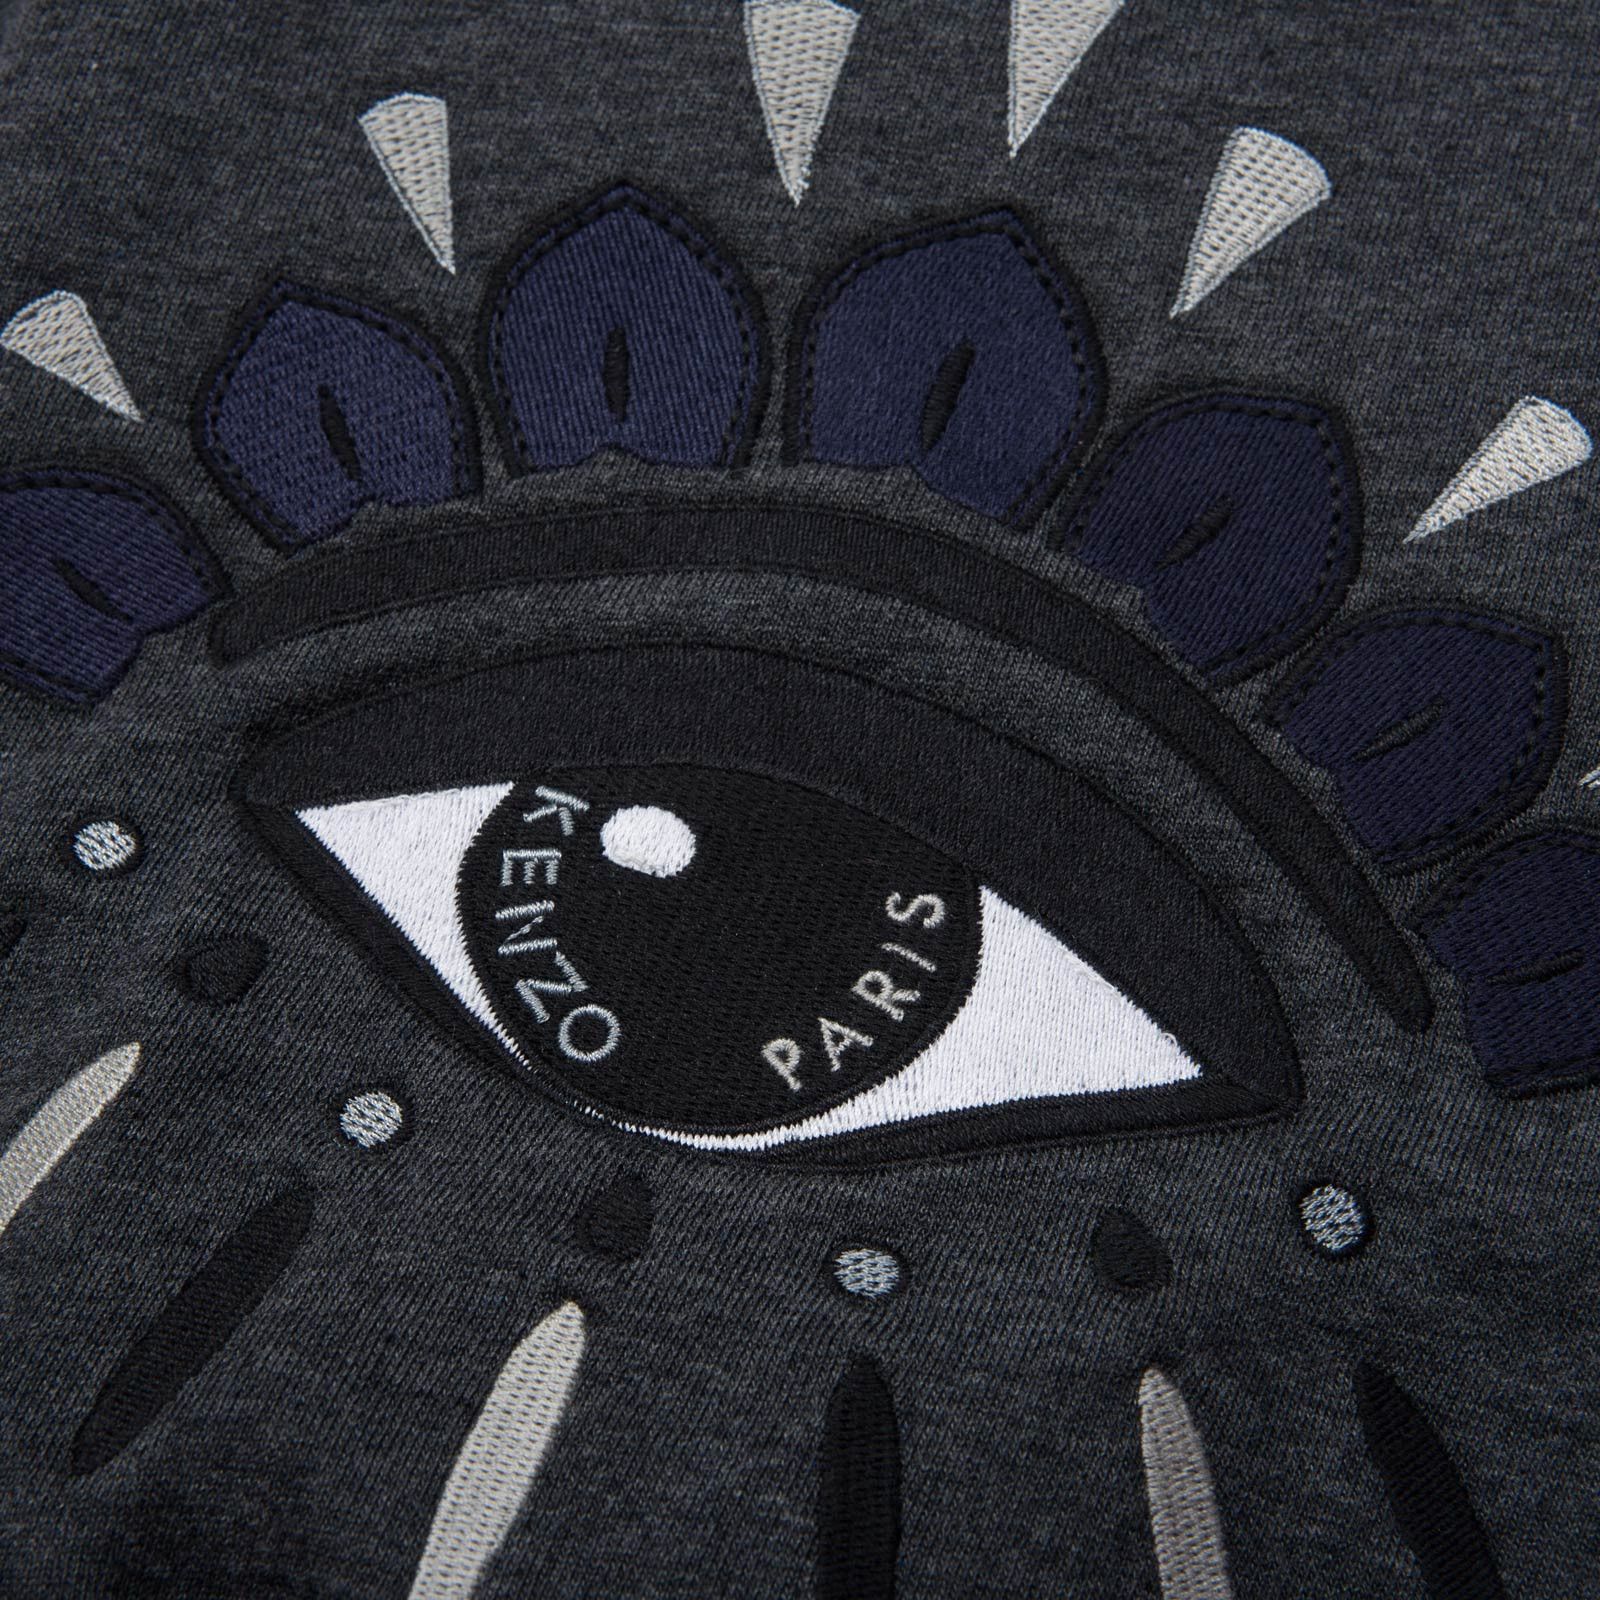 Boys&Girls Dark Grey Eye Embroidered Sweatshirt With Blue Lining - CÉMAROSE | Children's Fashion Store - 4